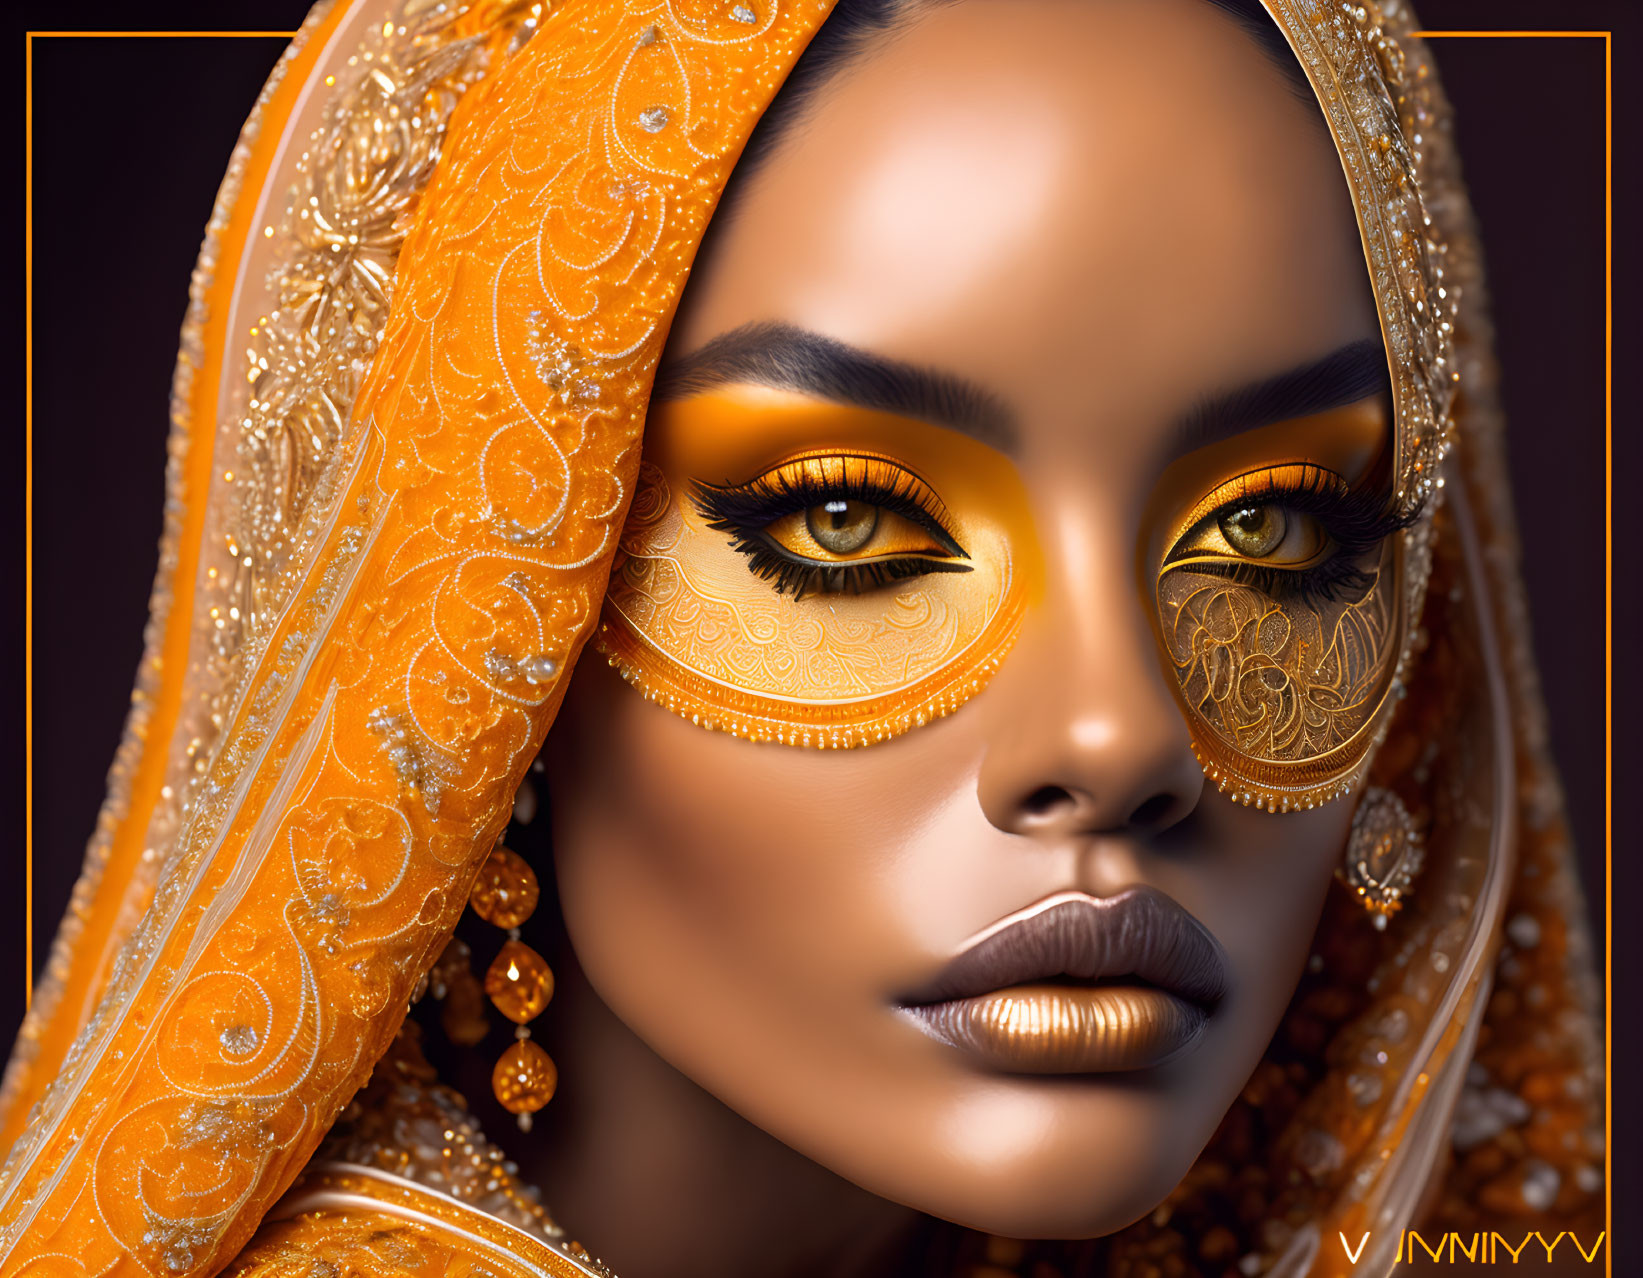 Woman with Golden Eye Makeup and Orange Veil Artwork